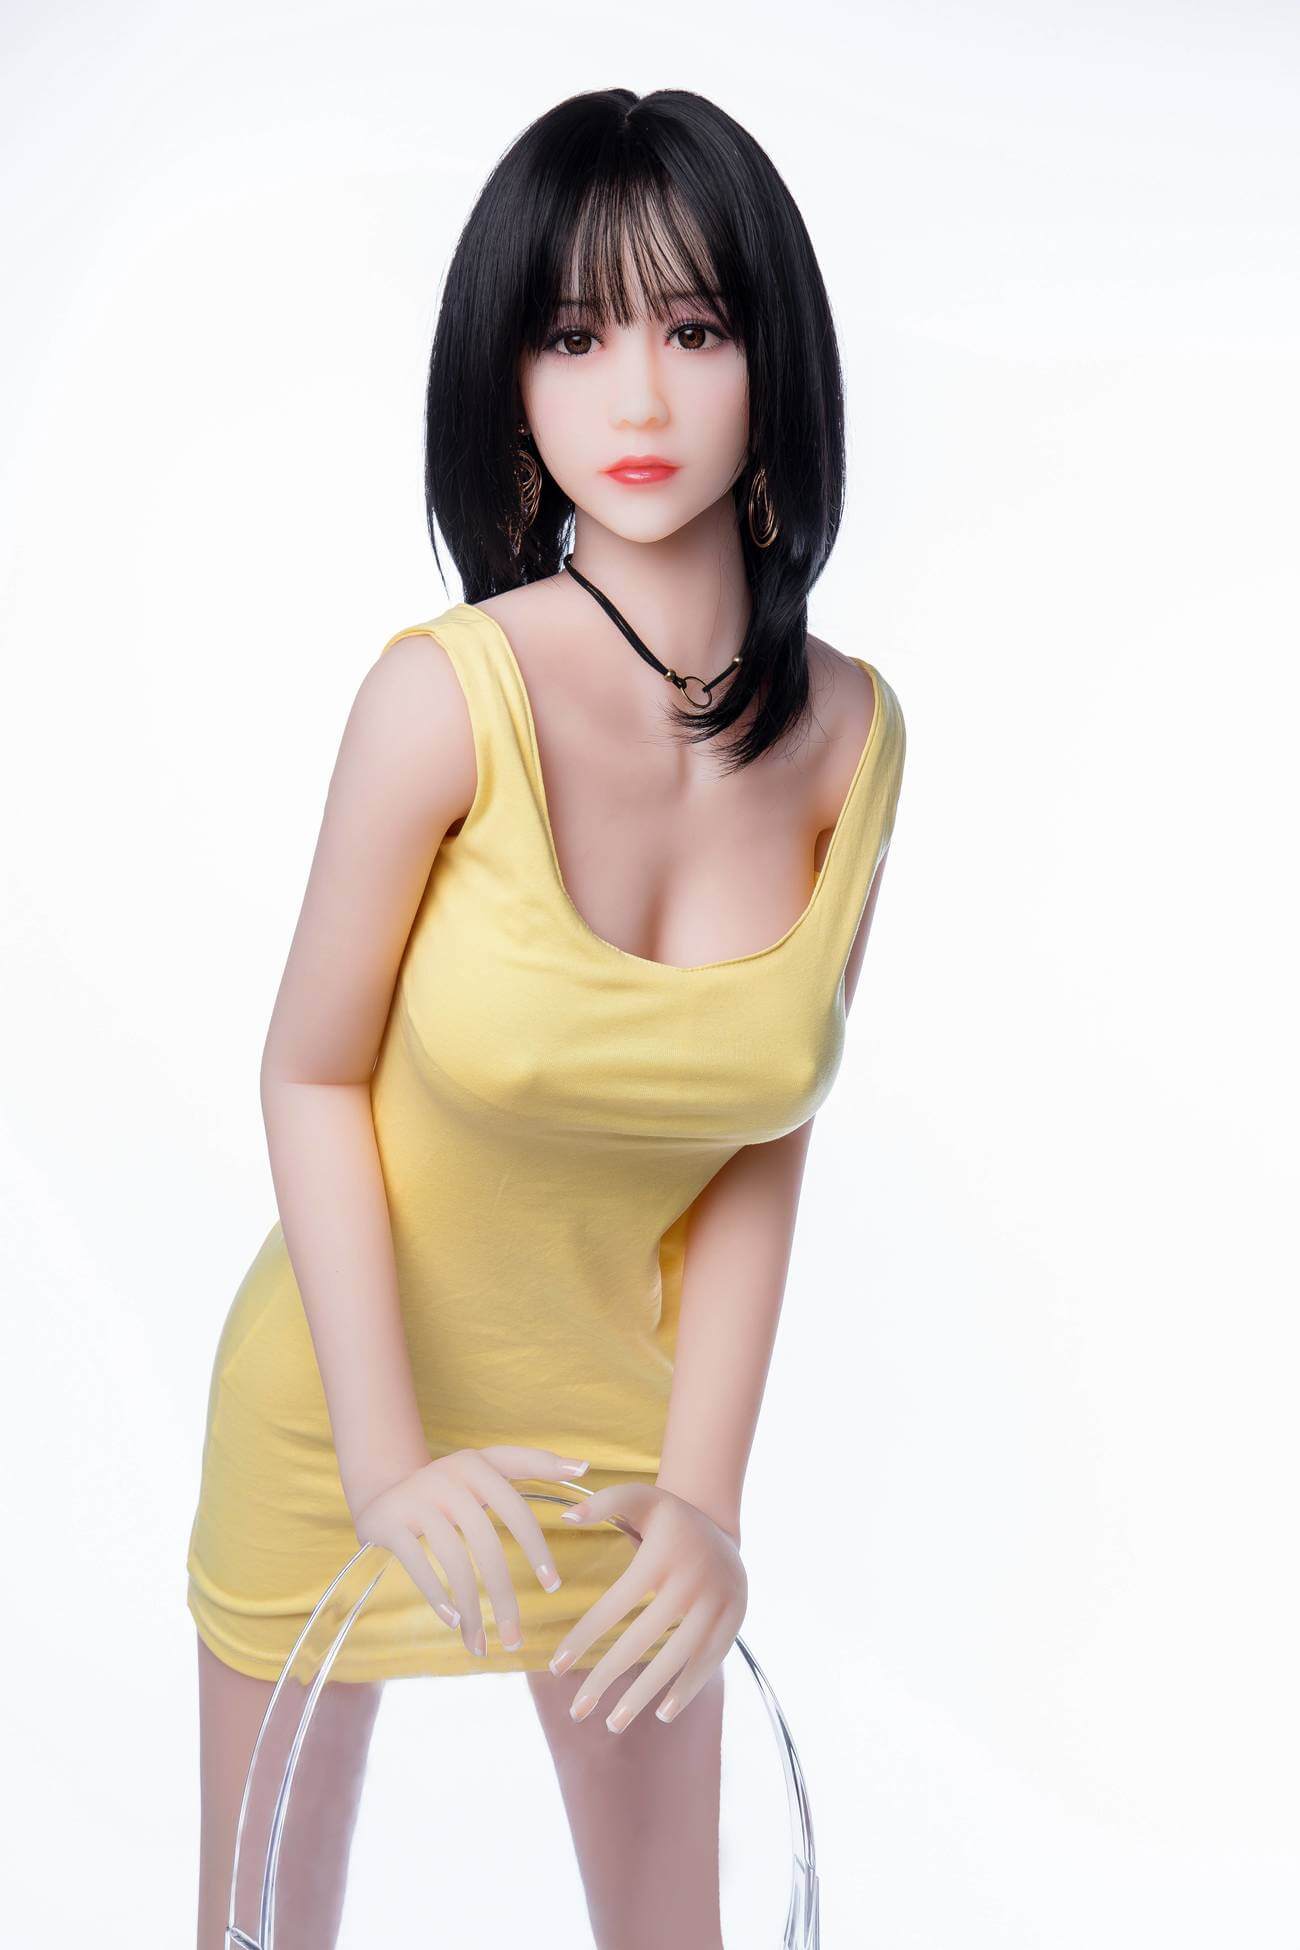 Japanese Life Size Sex Dolls – Lee 2